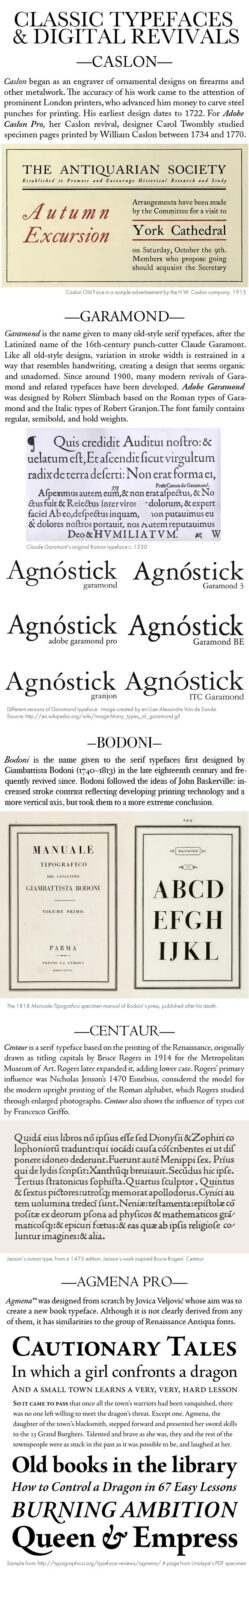 Classic Typefaces and Digital Revivals